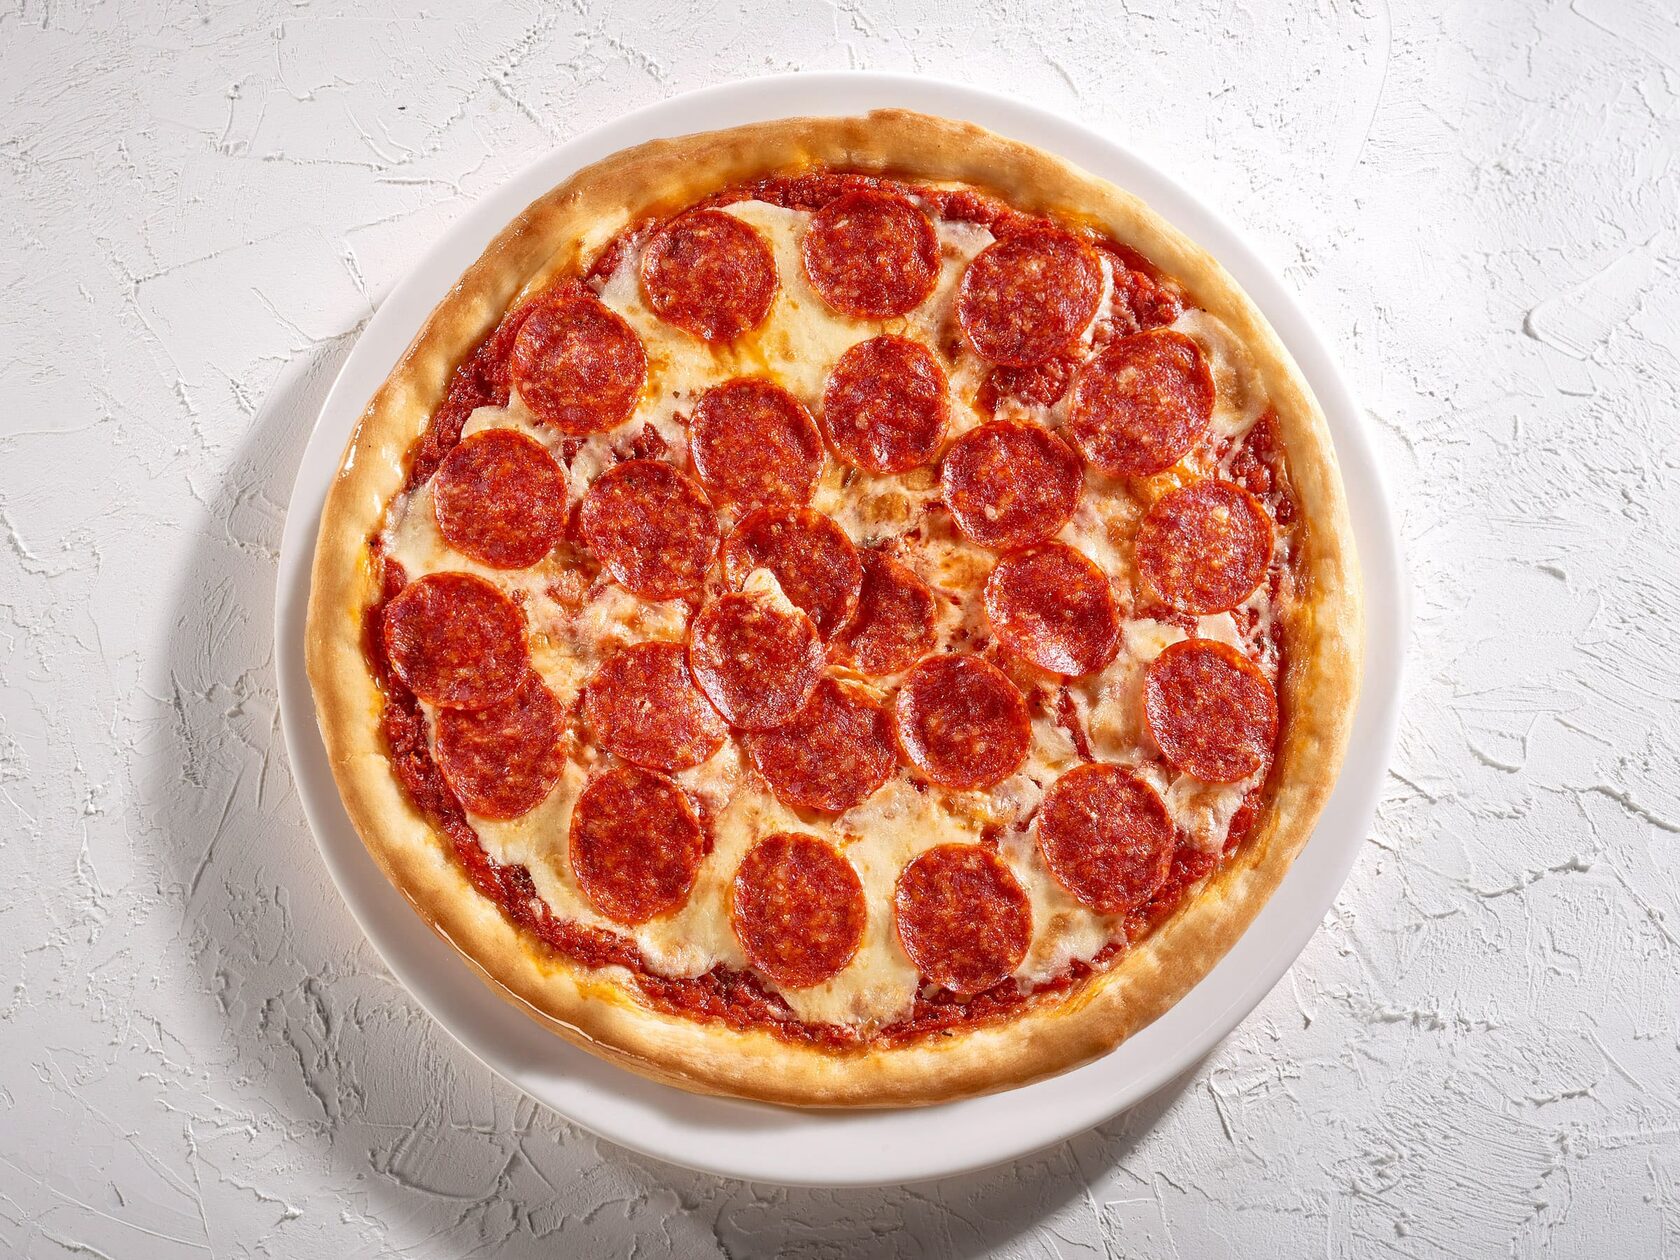 я хочу пиццу с перцем луком пепперони фото 84